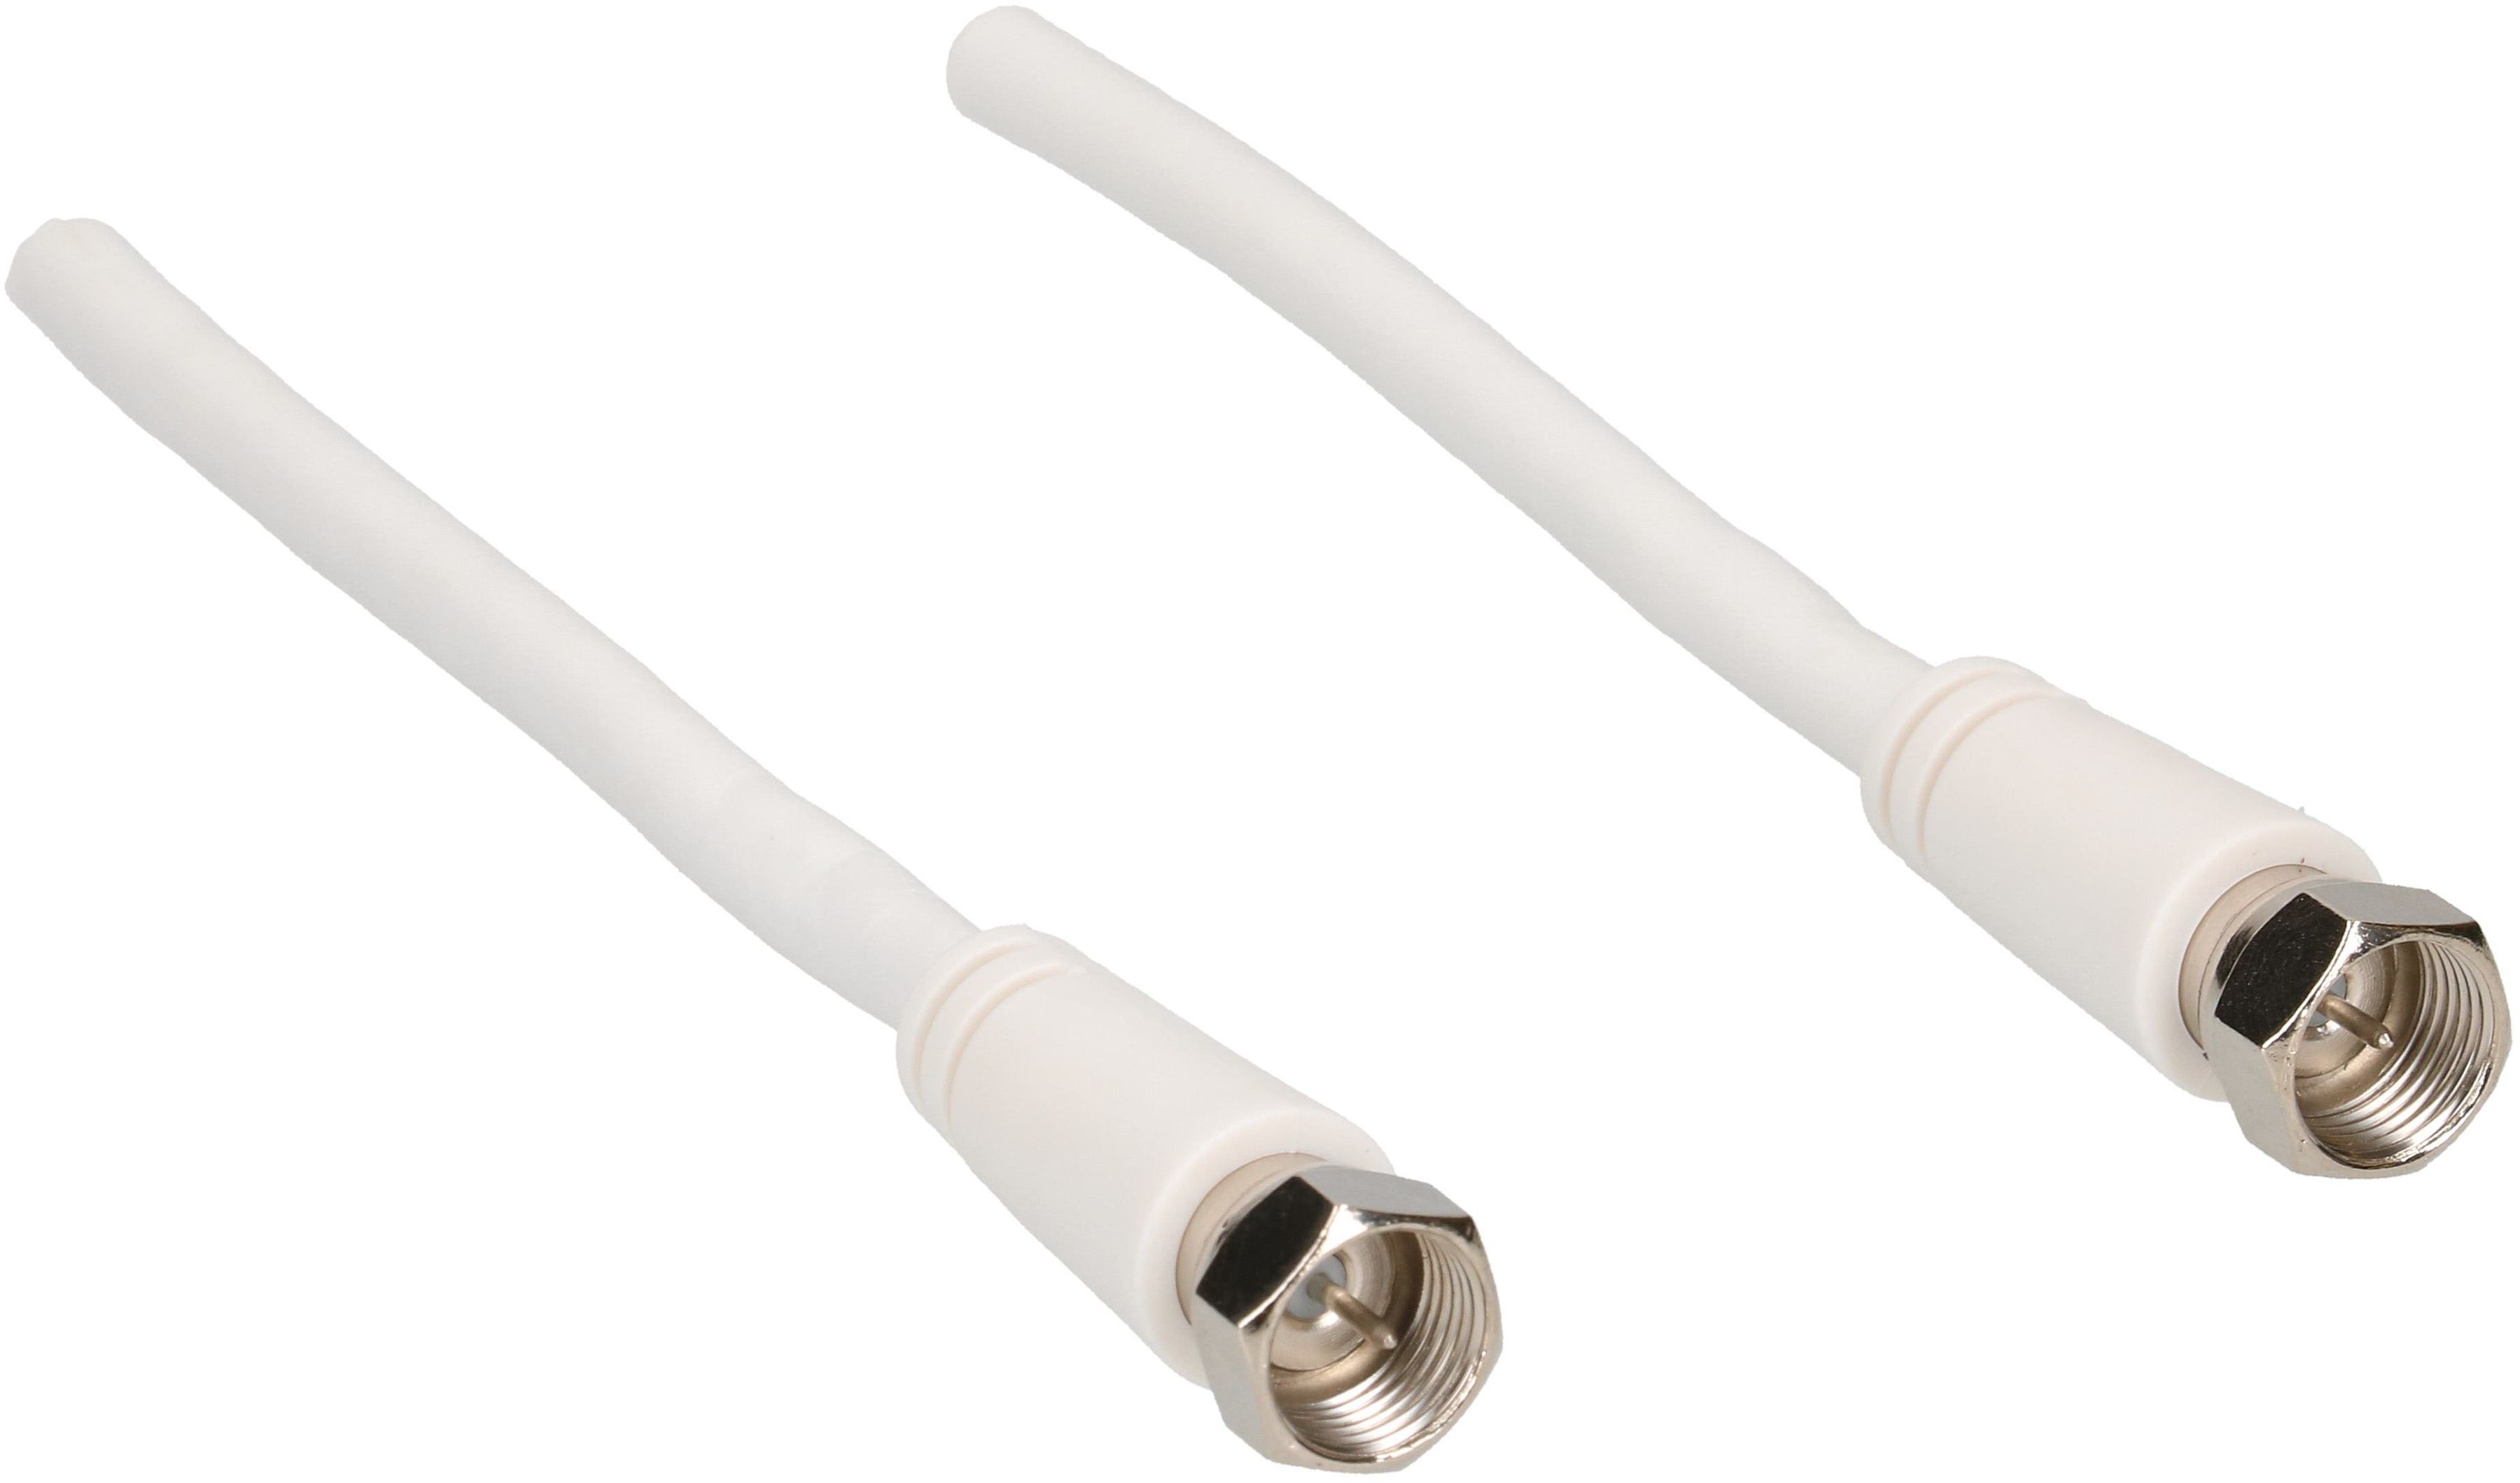 câble de raccordement SAT 90dB 10m blanc